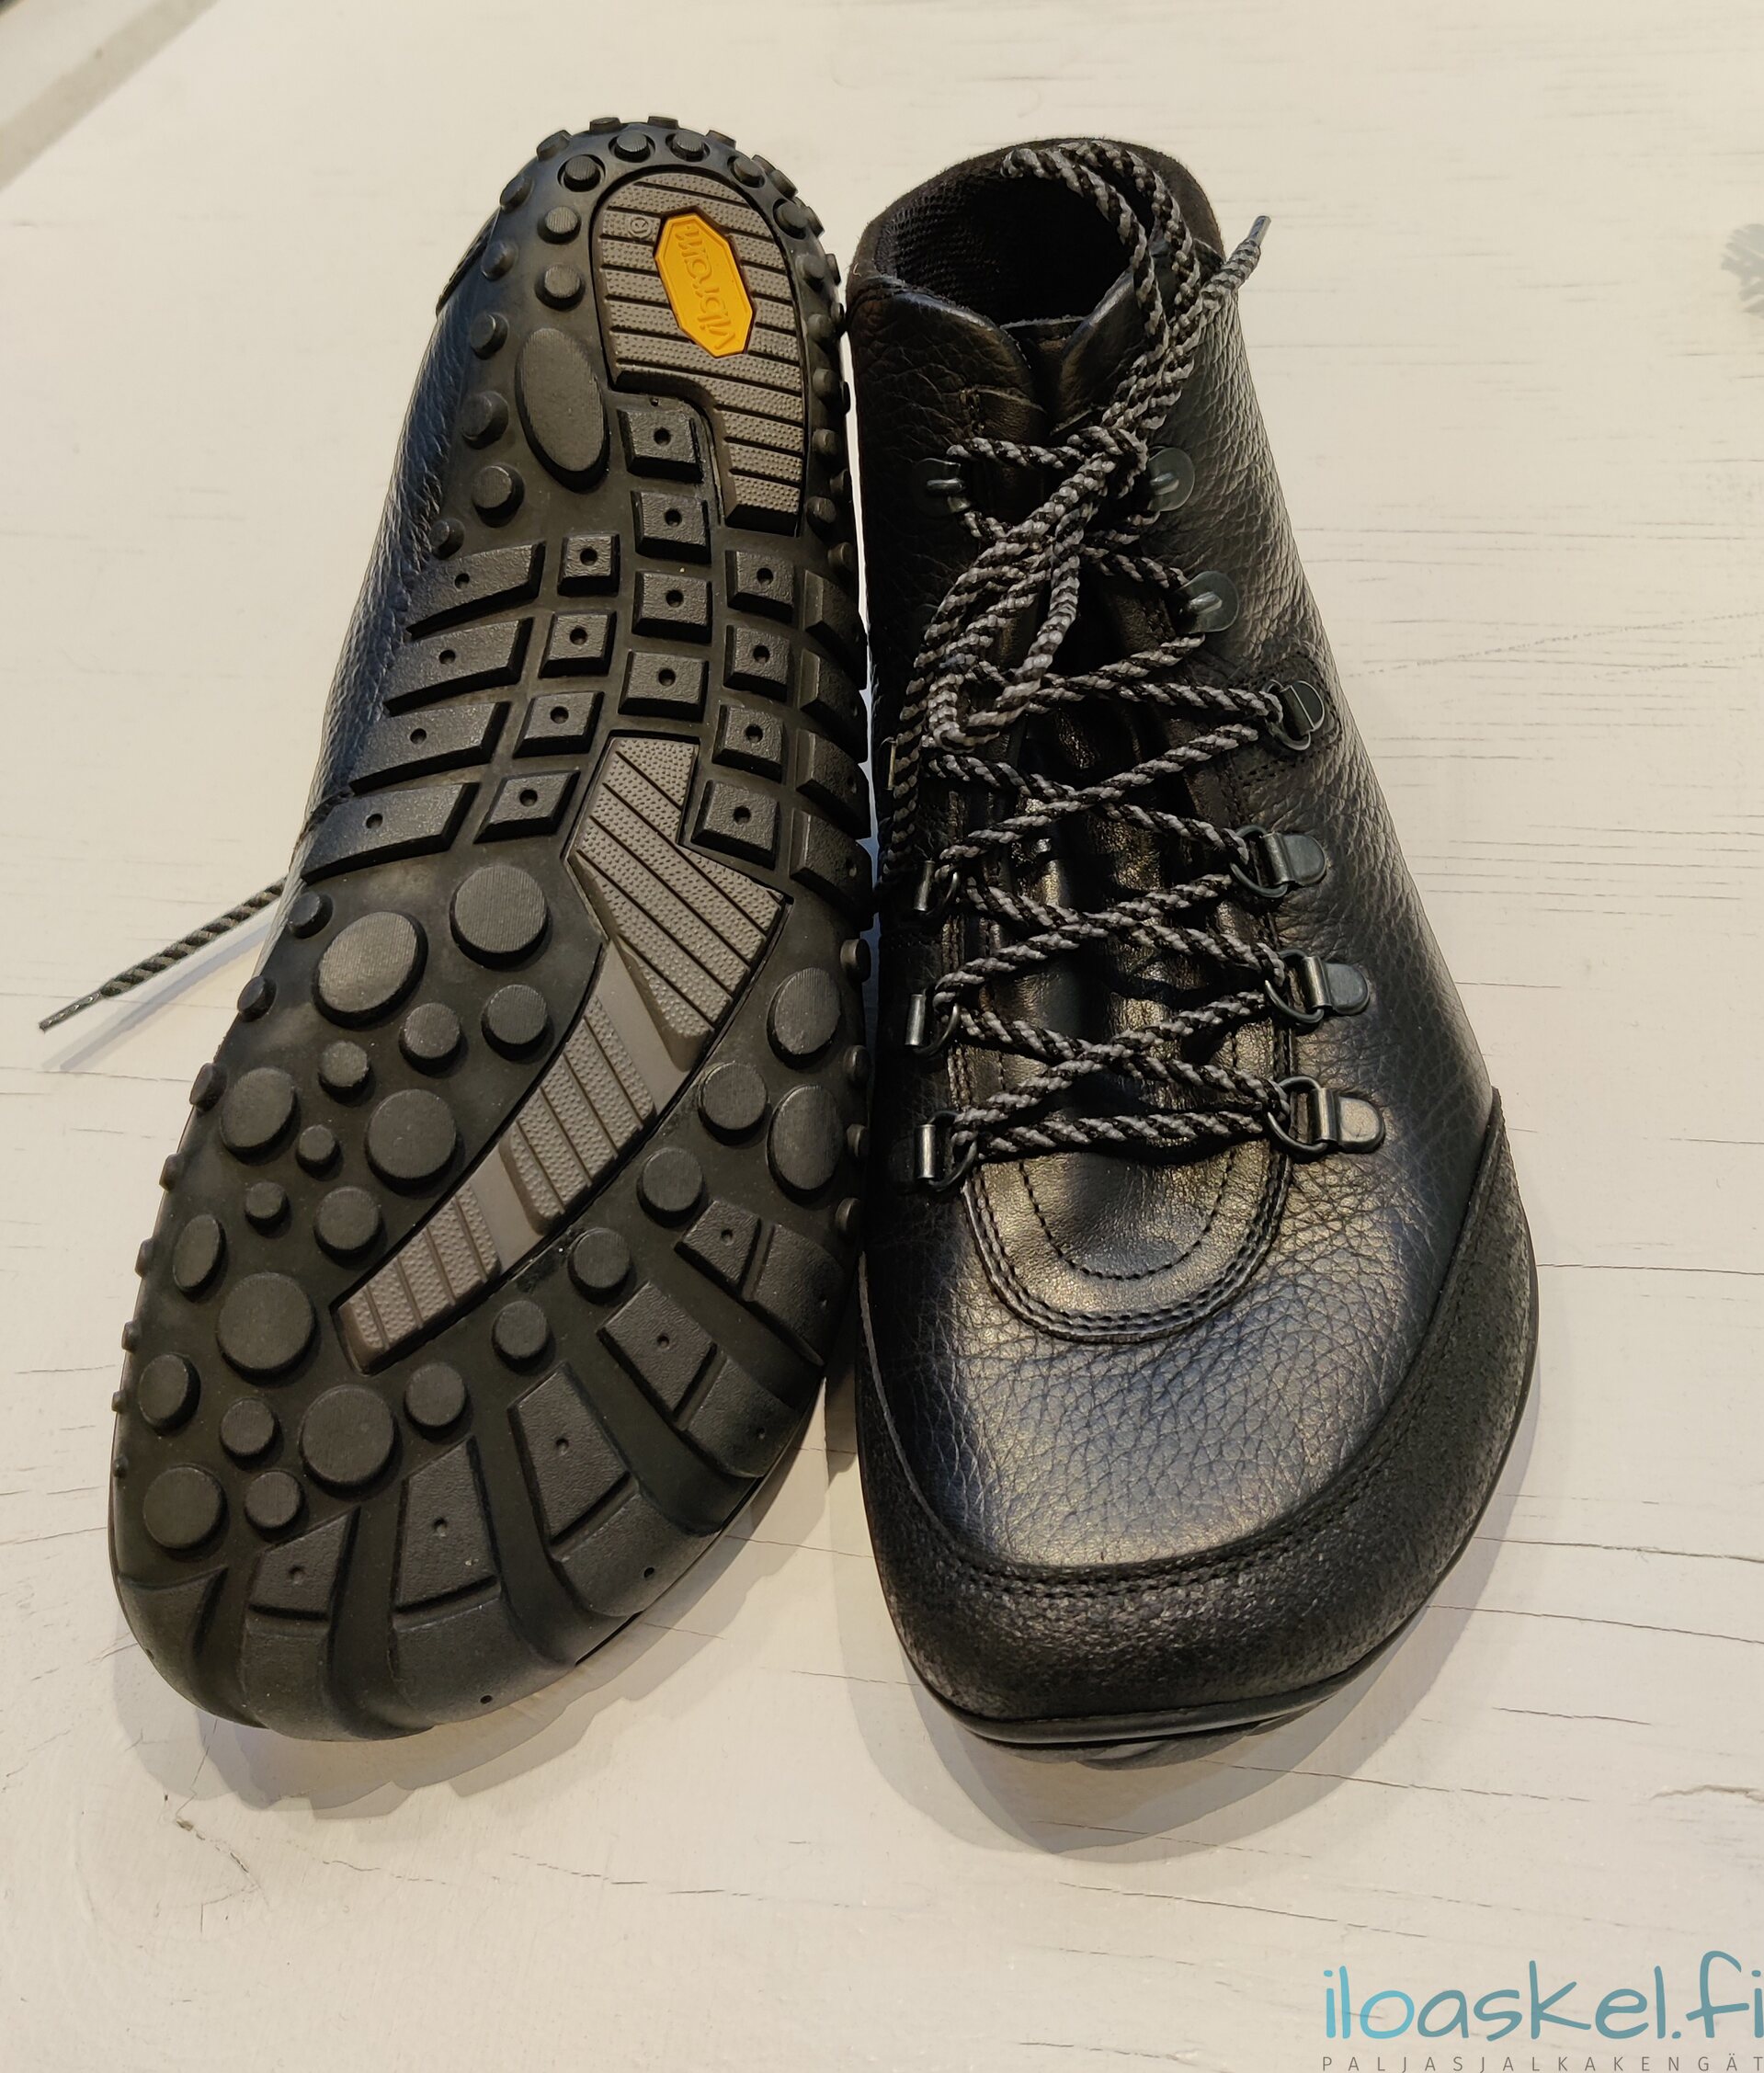 Joe Nimble wanderToes | Barefoot trekking shoes | Iloaskel.fi English